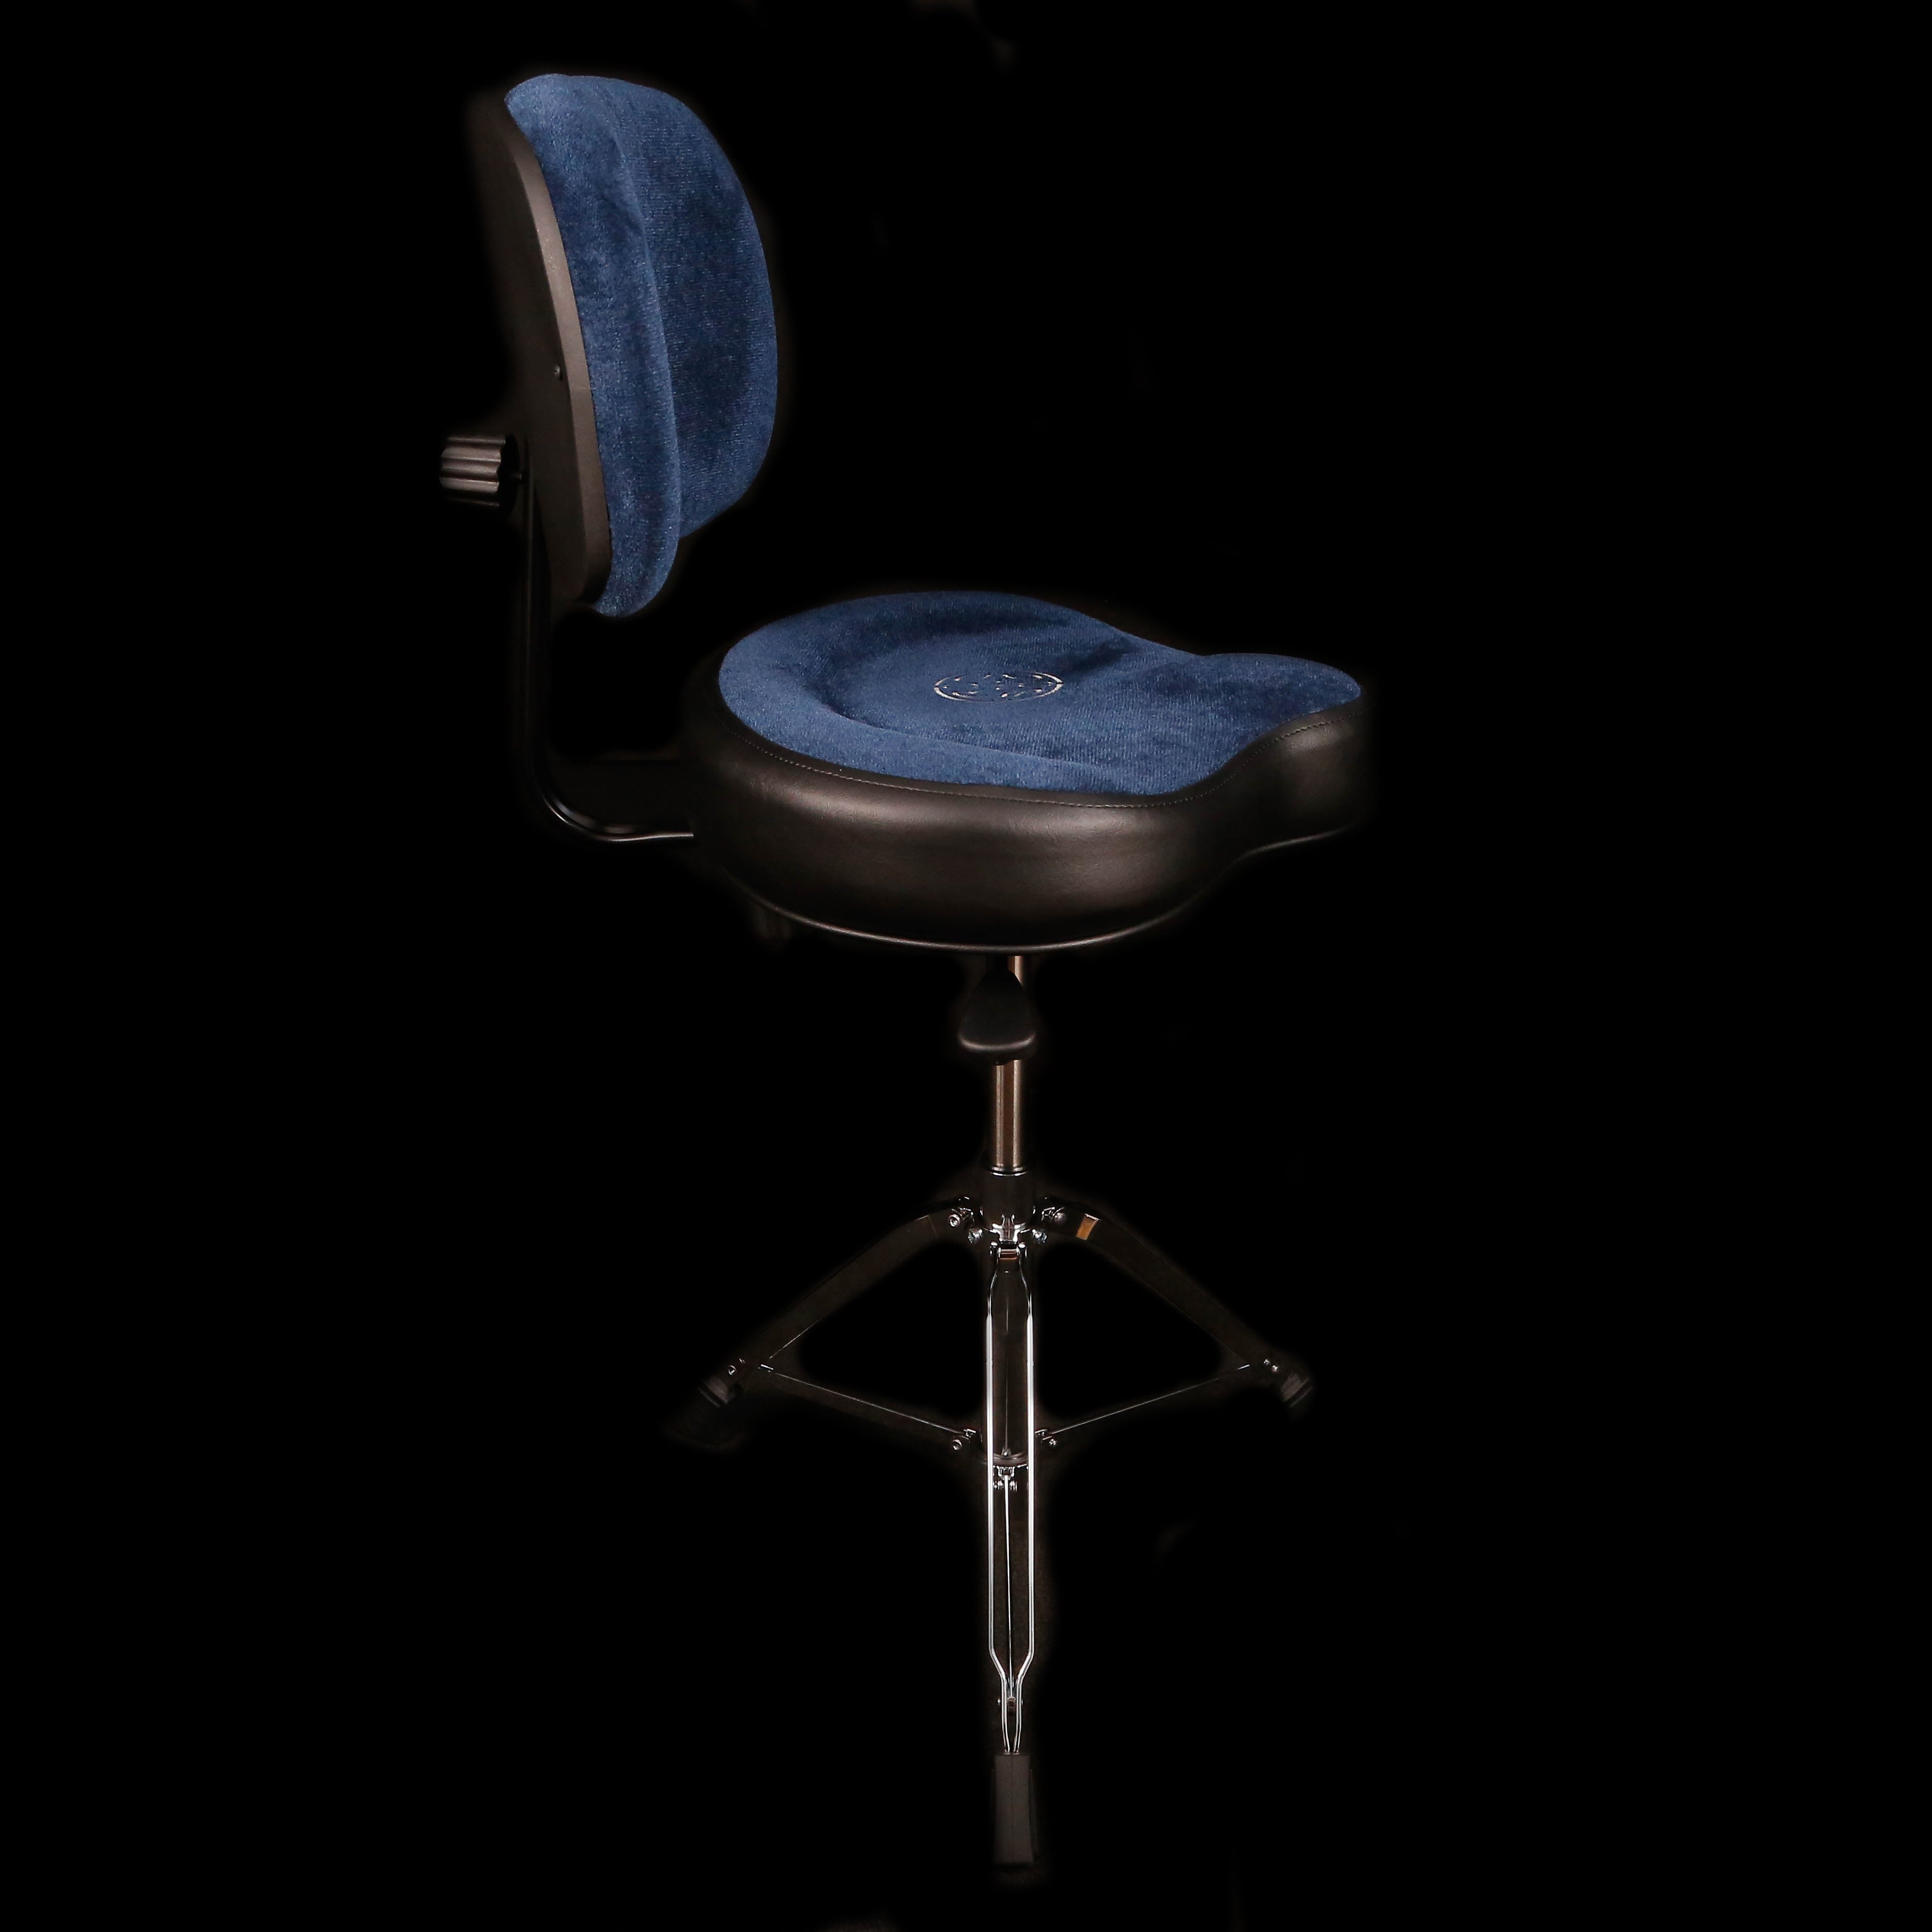 Roc & Soc Nitro Throne, Blue, Original Seat w/Removable Backrest